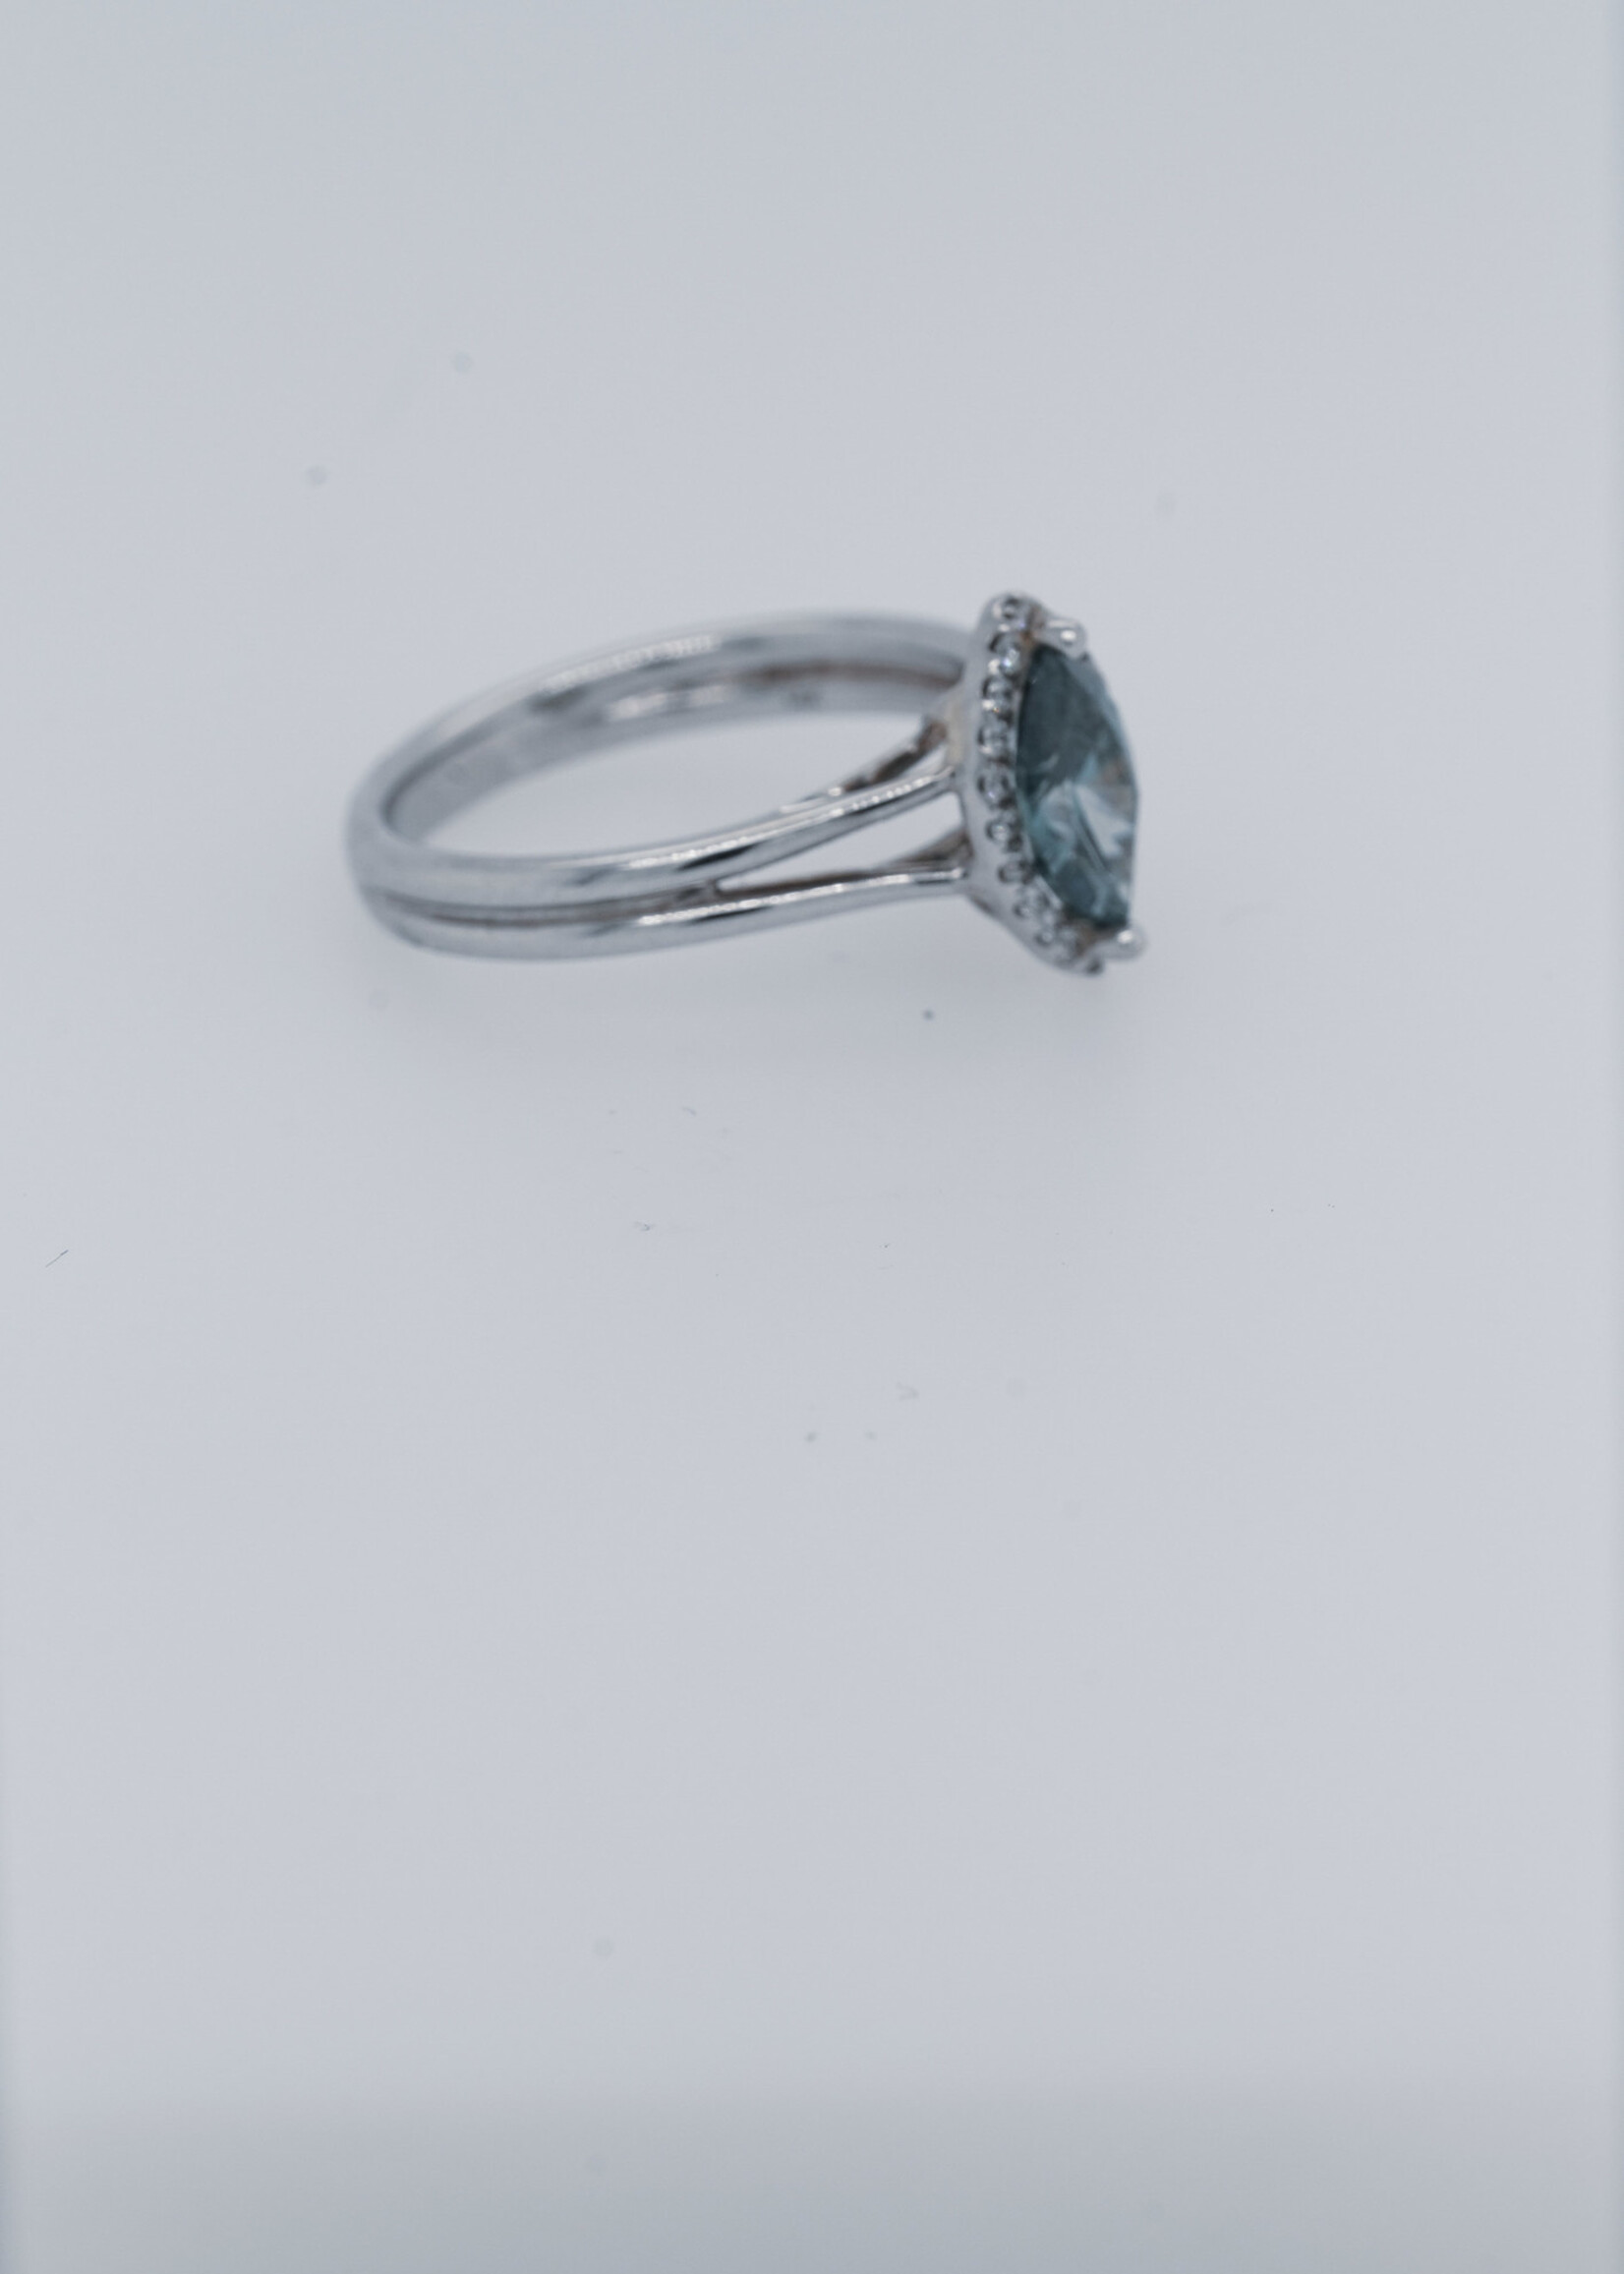 14KW 3.42g 1.25ctw (1.01ctr) Blue/I1 Marquise Diamond Halo Engagement Ring (size 7)